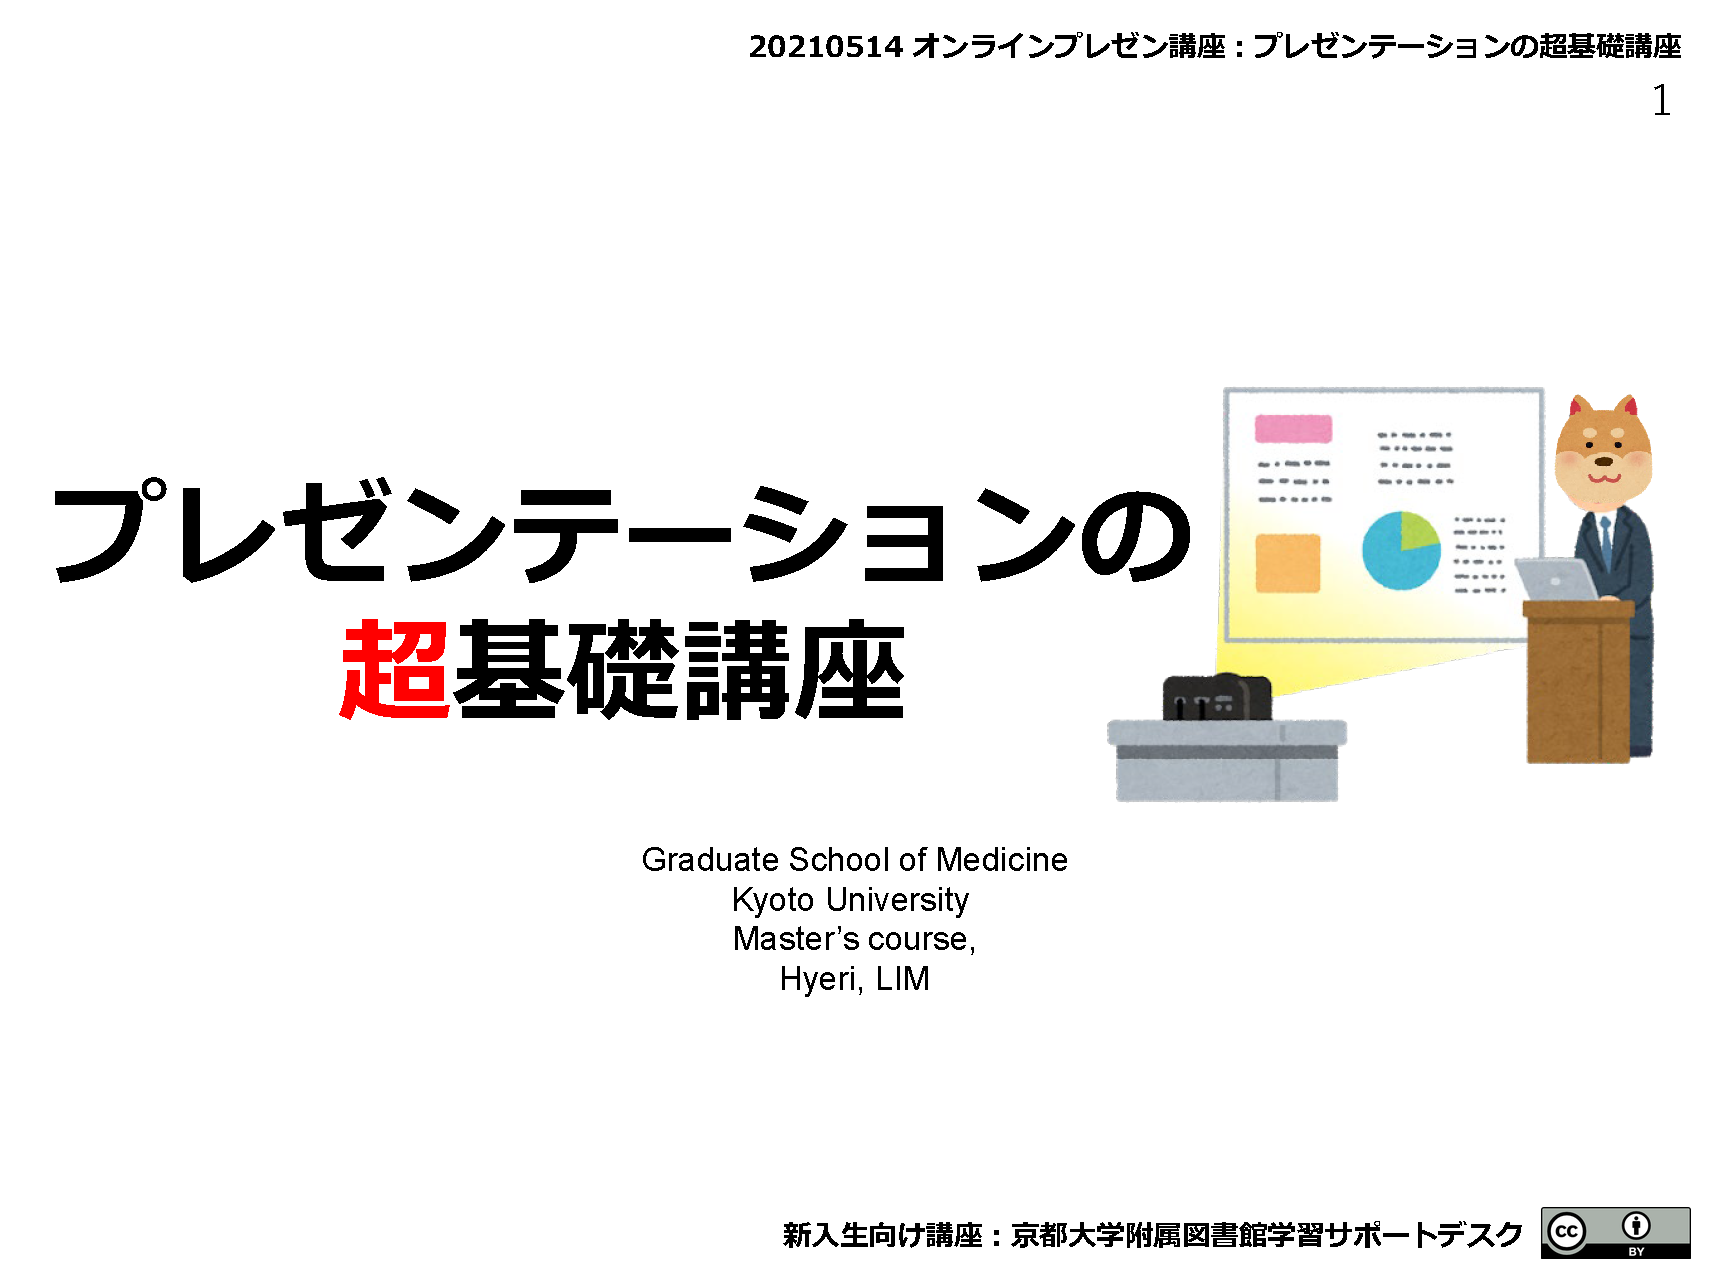 PDF　プレゼンテーションの超基礎講座　京都大学学術情報リポジトリKURENAIから閲覧可能